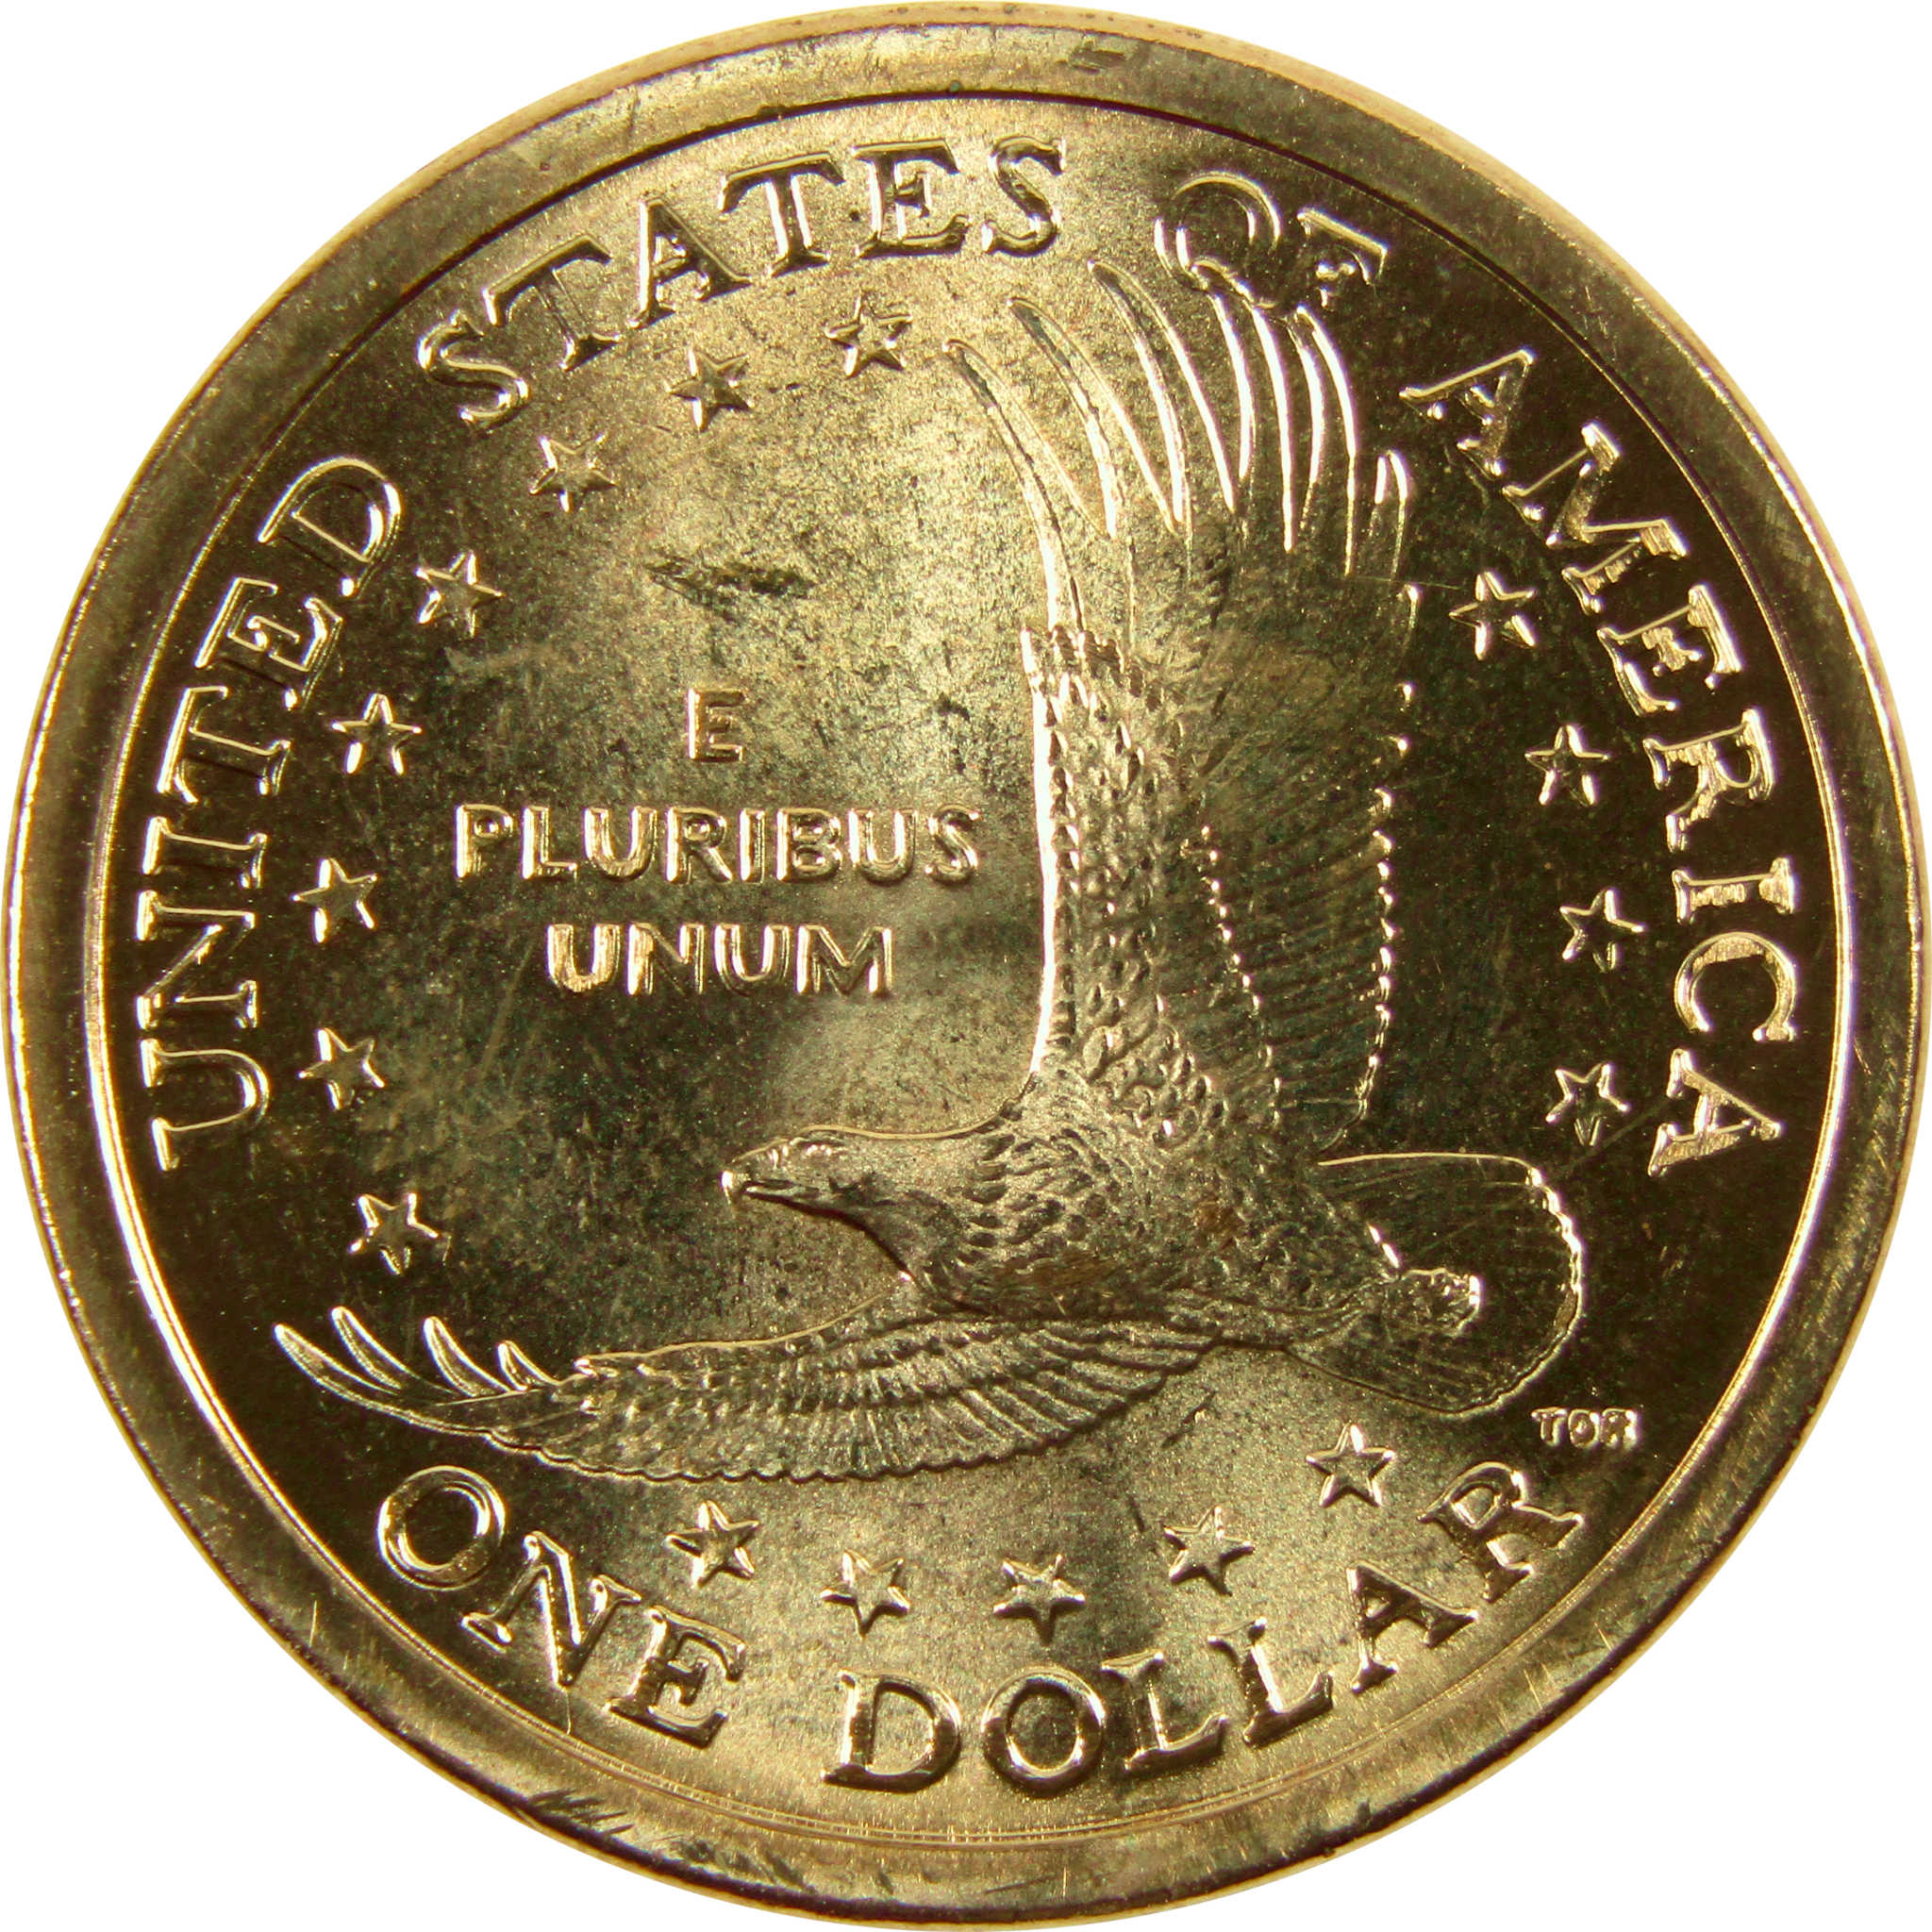 2008 D Sacagawea Native American Dollar BU Uncirculated $1 Coin